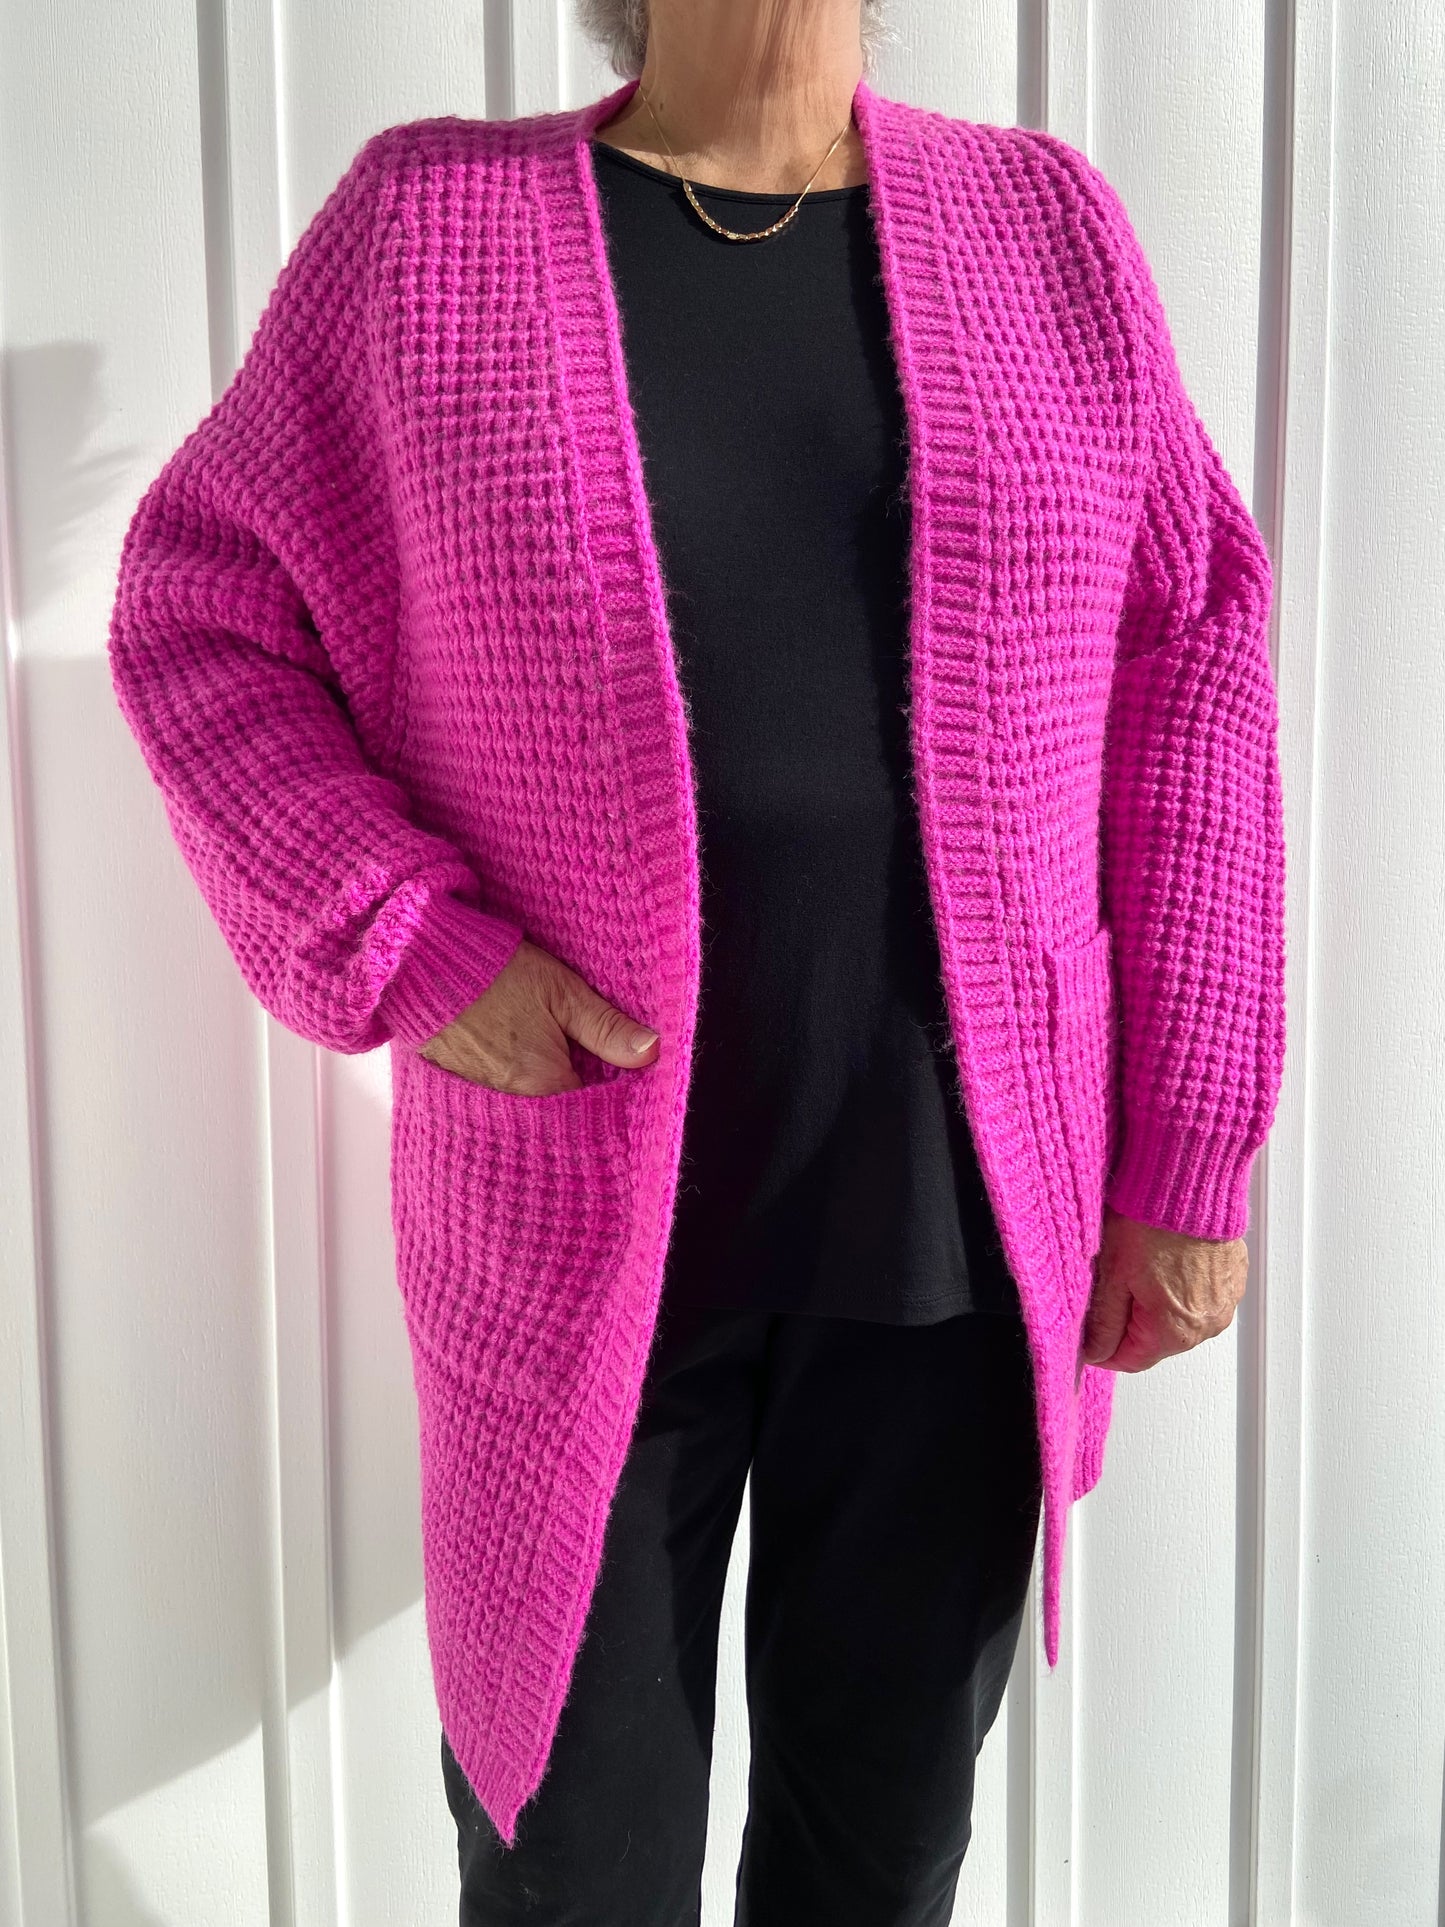 Pop of Pink Cardigan Sweater